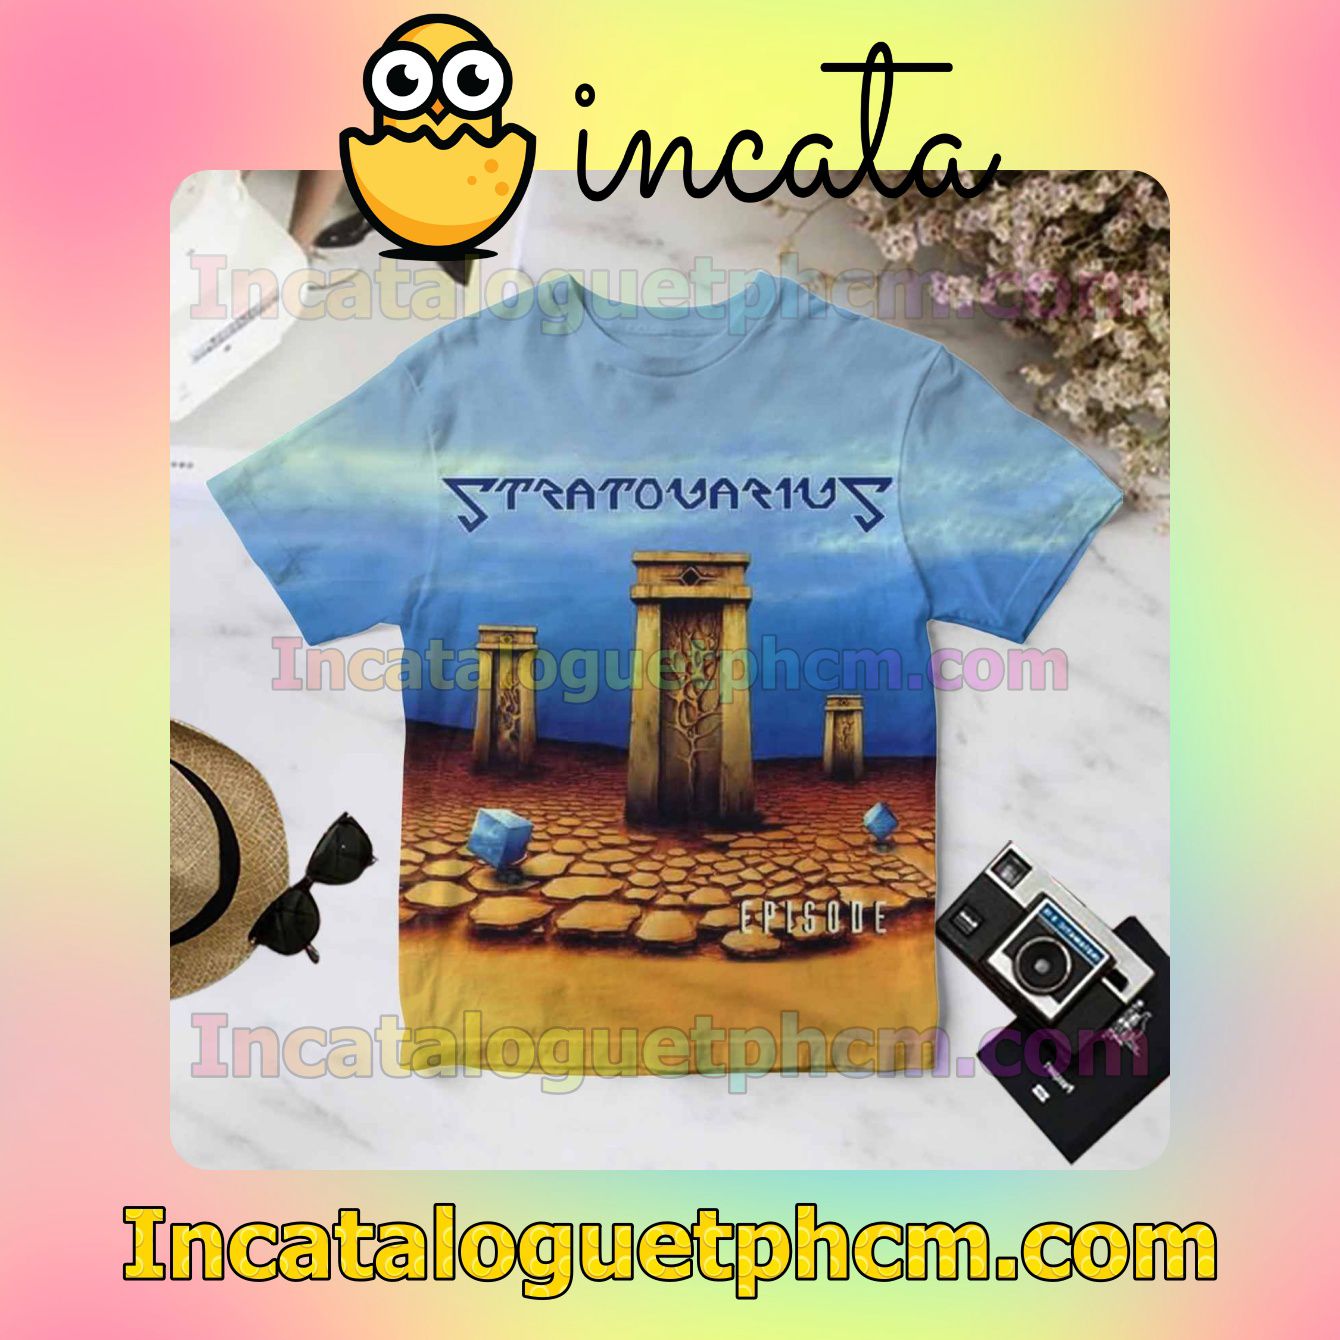 Stratovarius Episode Album Cover For Fan Shirt